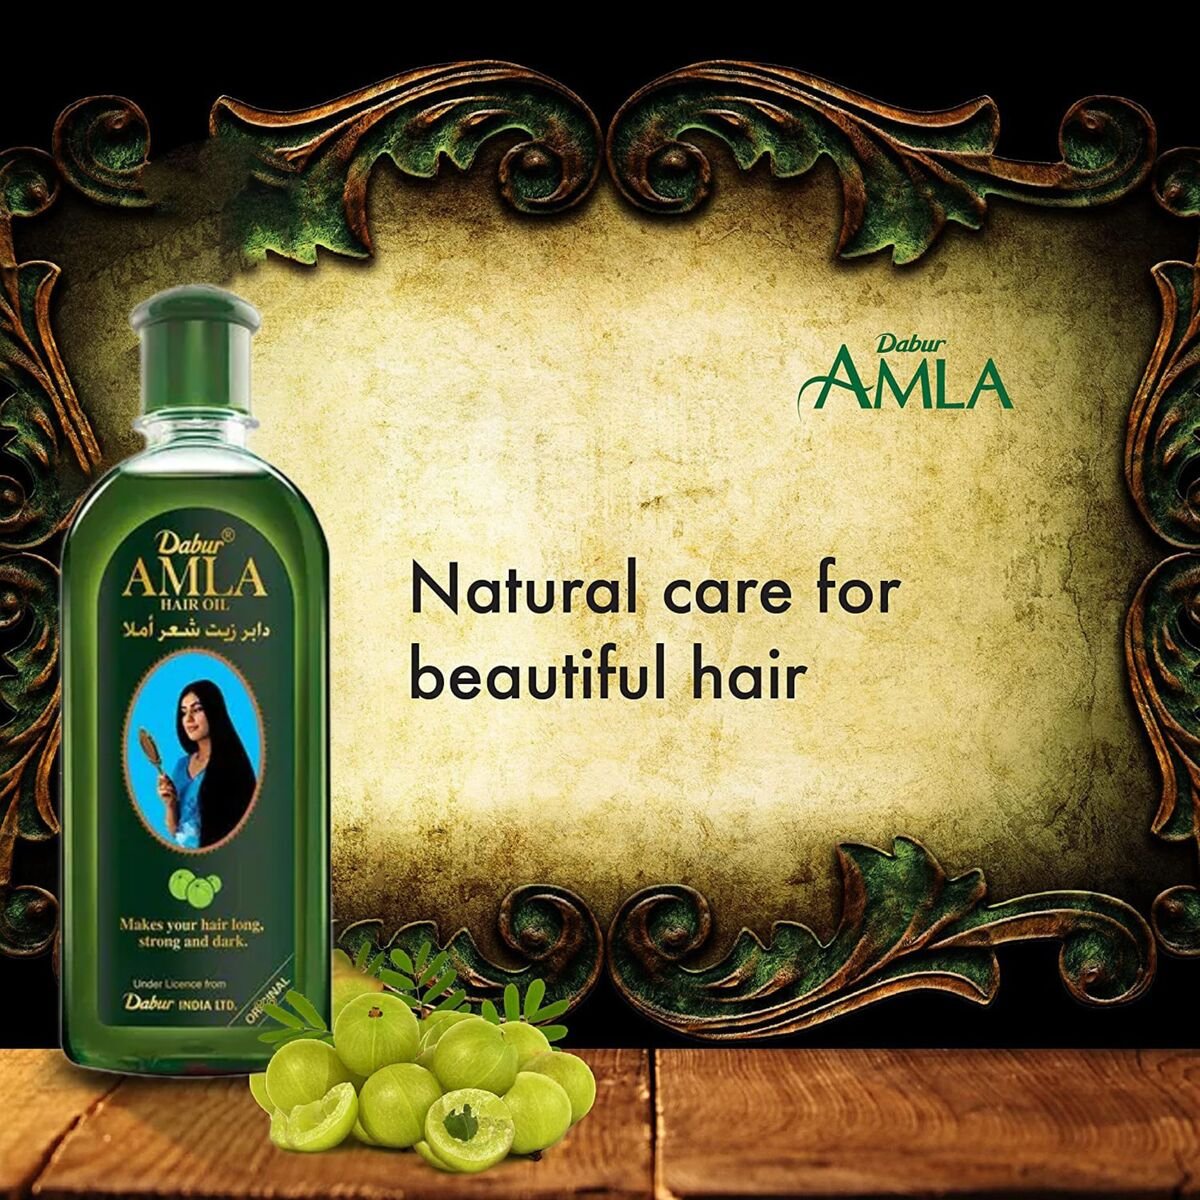 Dabur Amla Hair Oil 500 ml